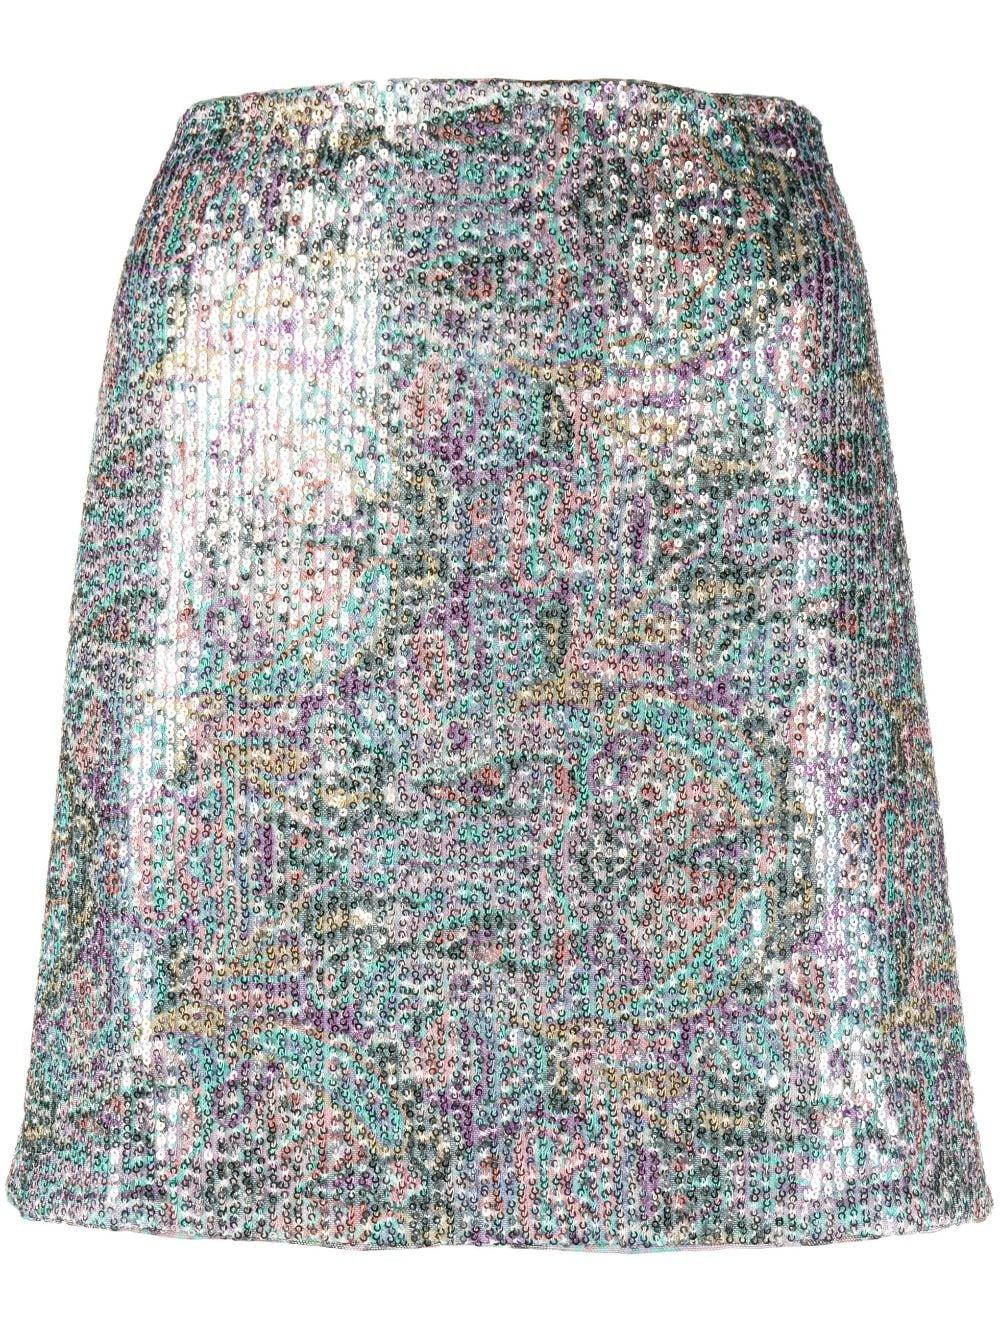 Ba&sh Zita Sequin-embellished Skirt in Gray | Lyst